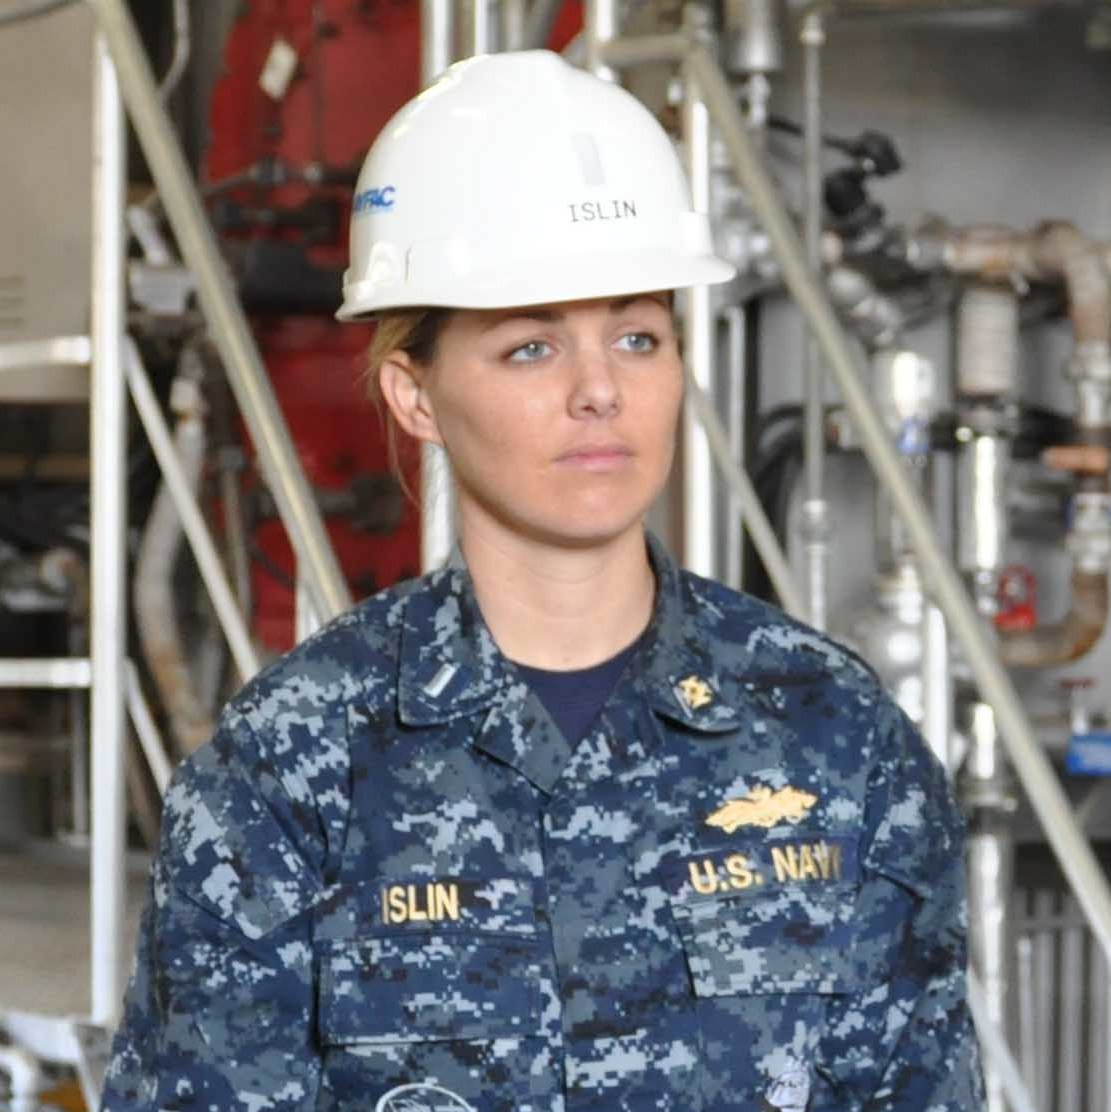 Ally Islin at a power plant facility at Naval Air Facility Atsugi, Japan, 2015. U.S. Navy Photo/Released.